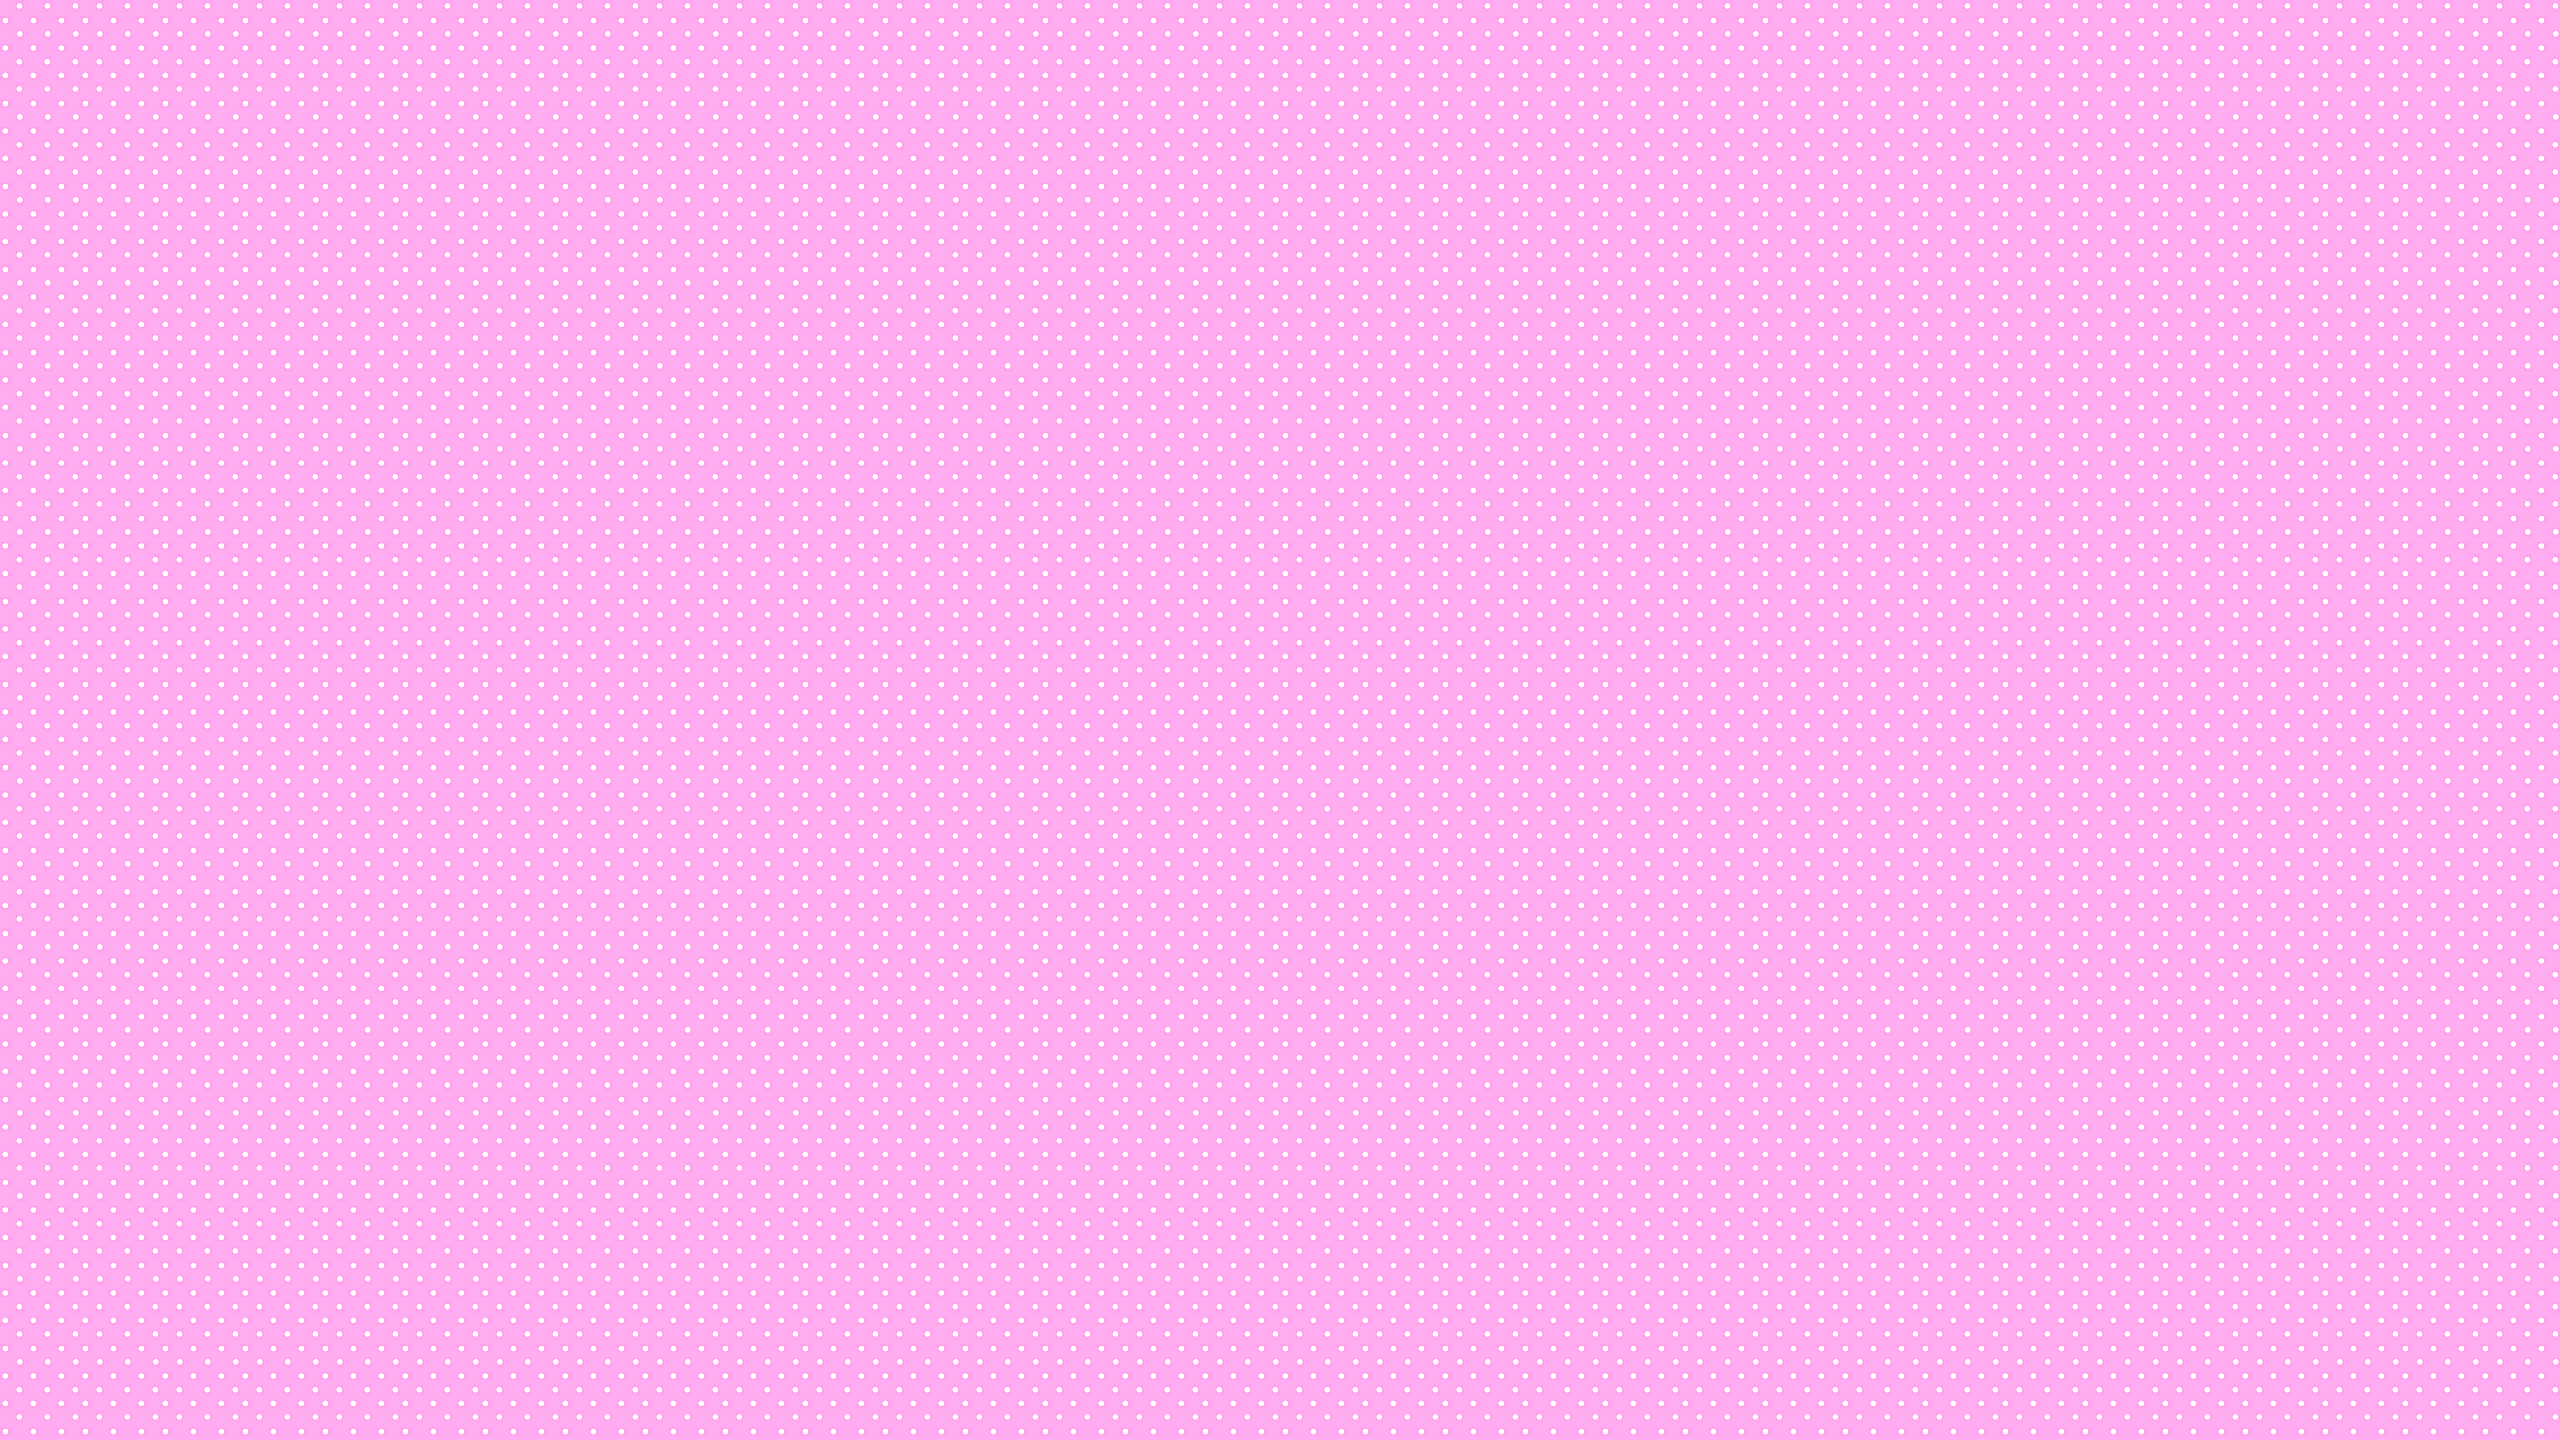 Pastel Pink Dots Desktop Wallpaper is easy Just save the wallpaper